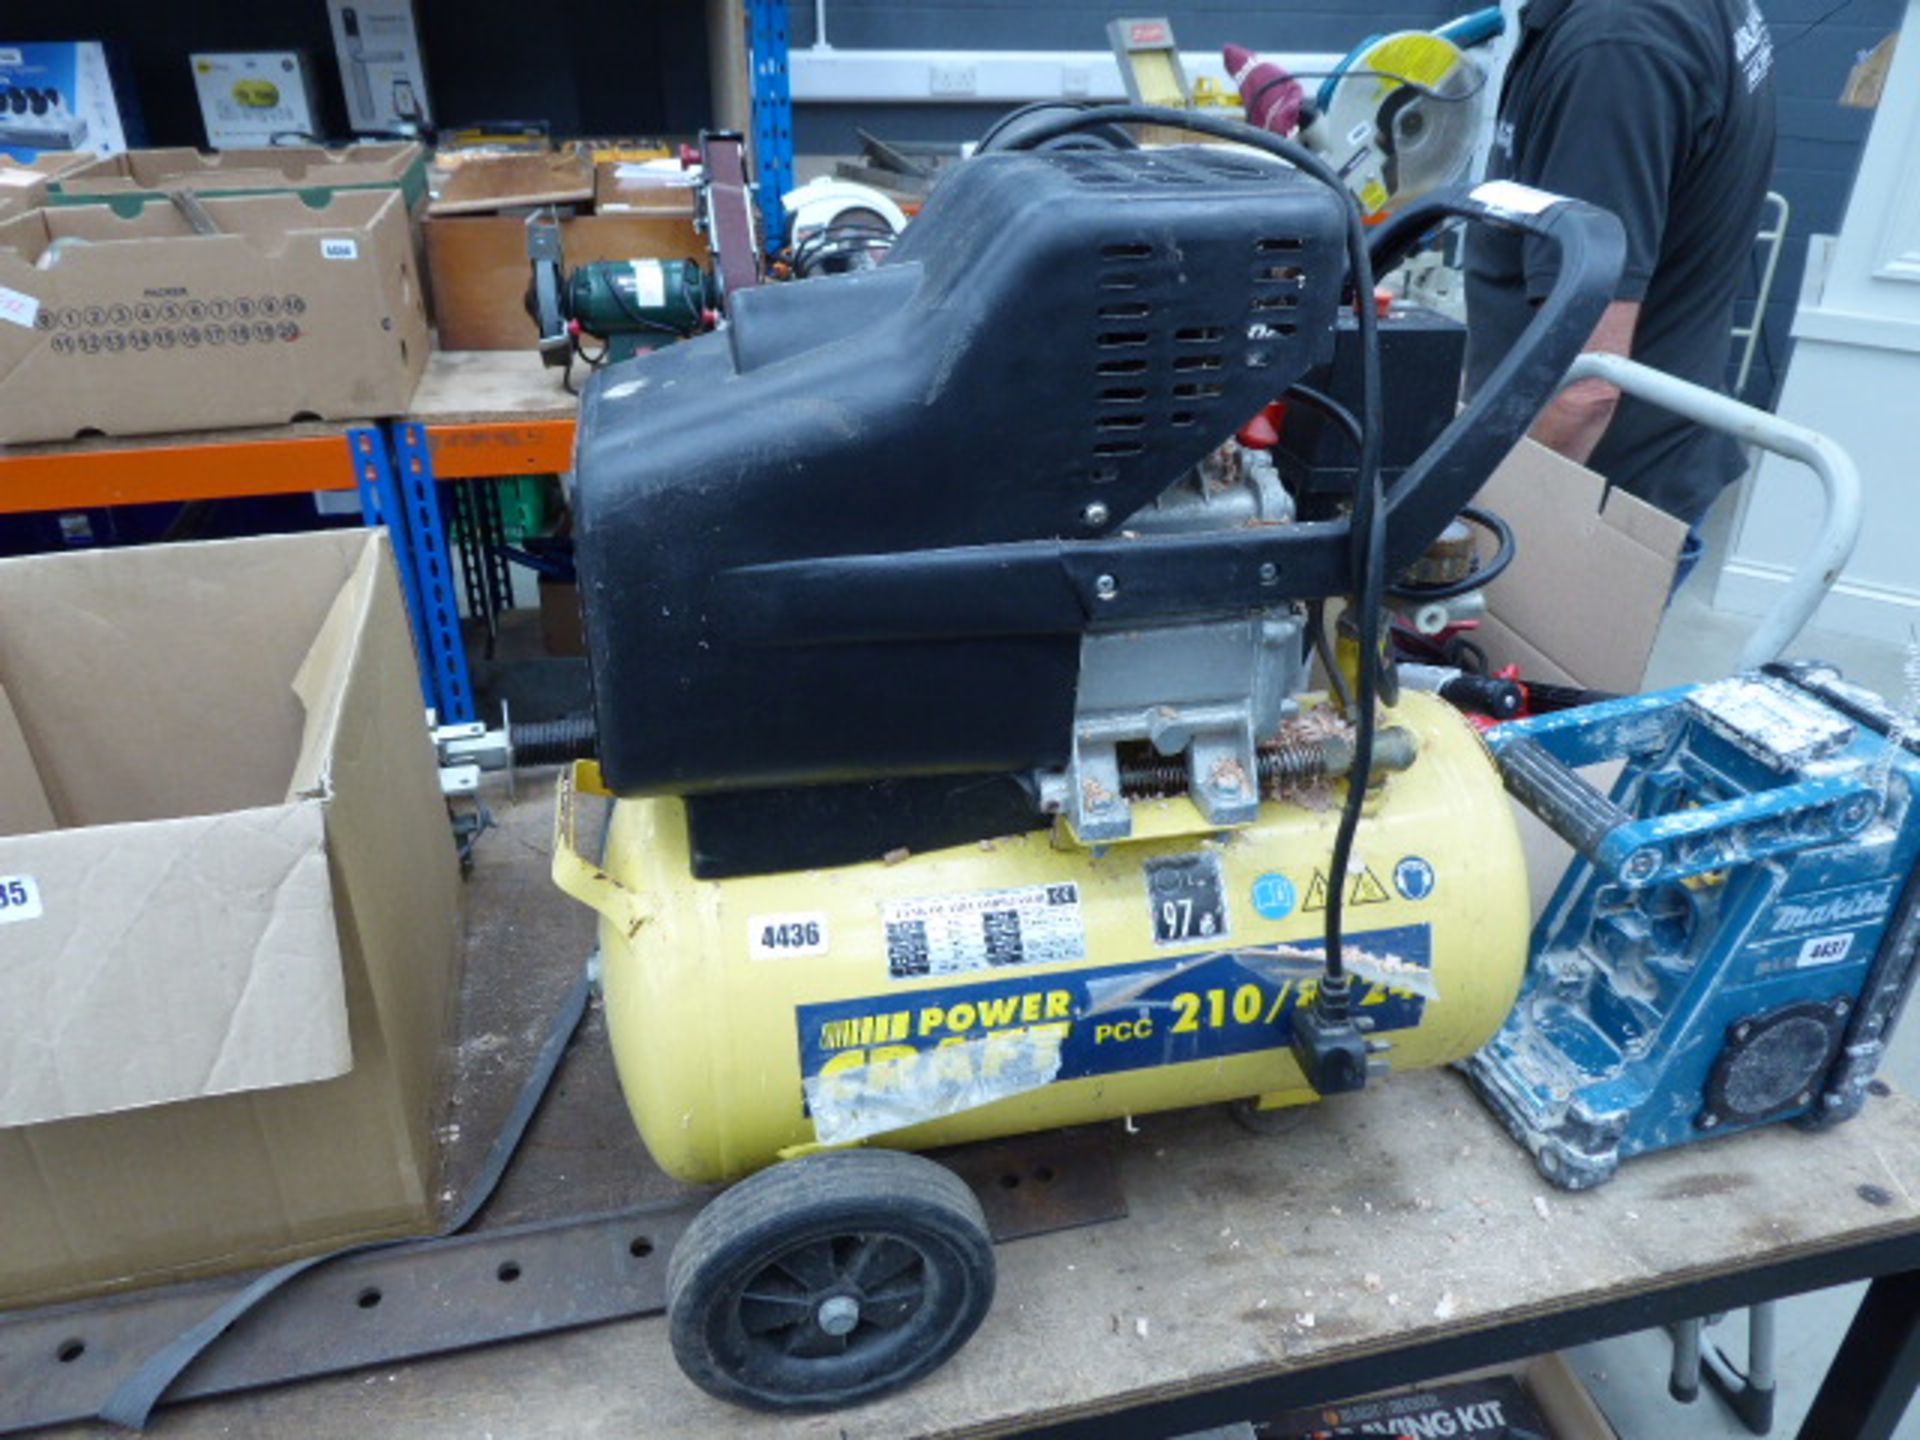 Yellow Powercraft electric compressor